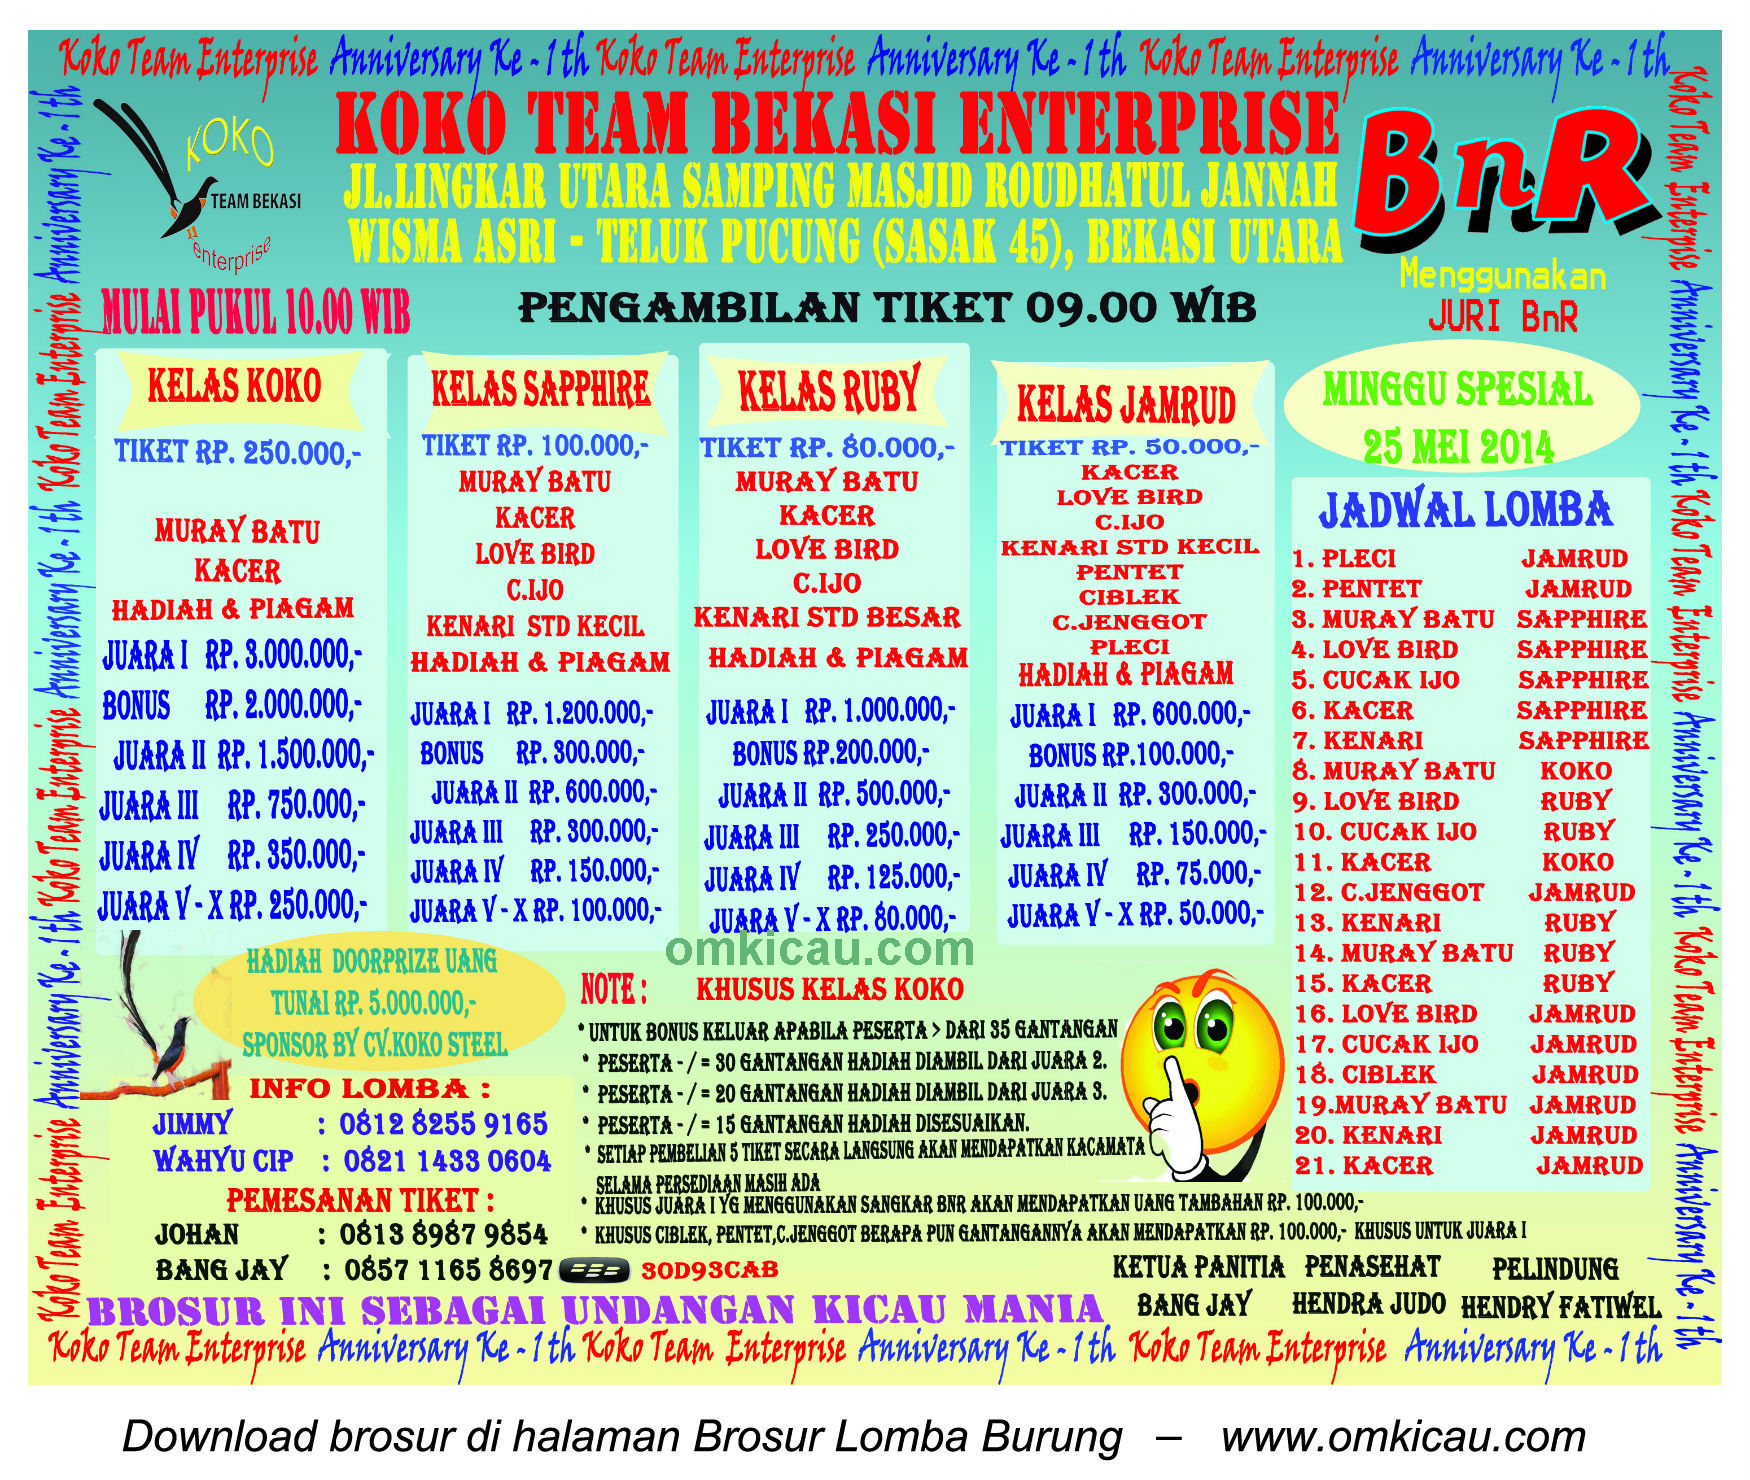 Brosur Lomba Burung Berkicau 1st Anniversary Koko Team Enterprise - Bekasi, 25 Mei 2014